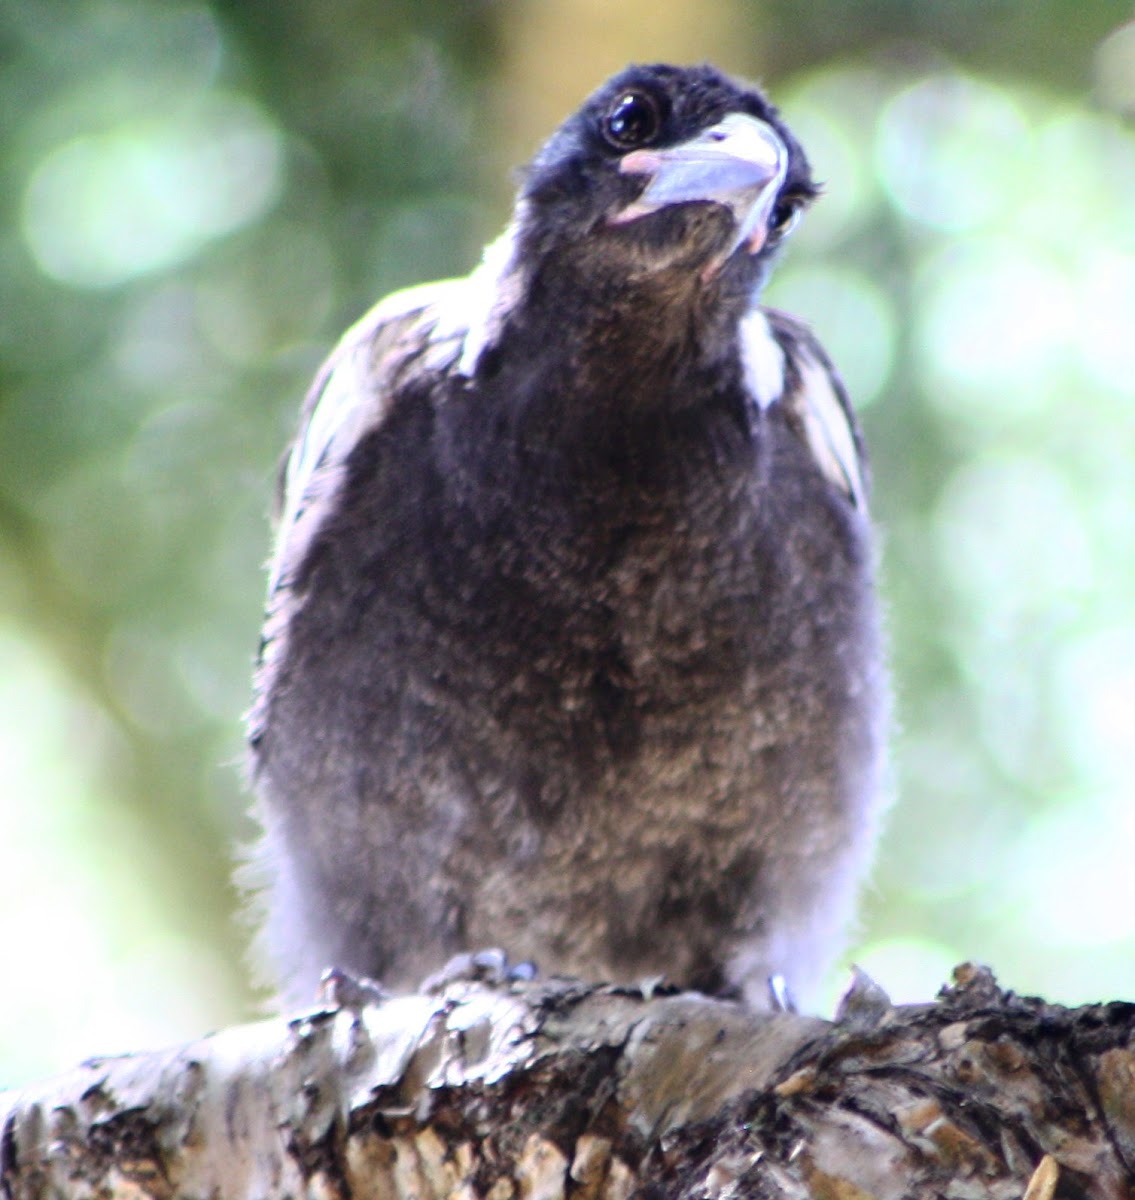 Juvenile Australian Magpie